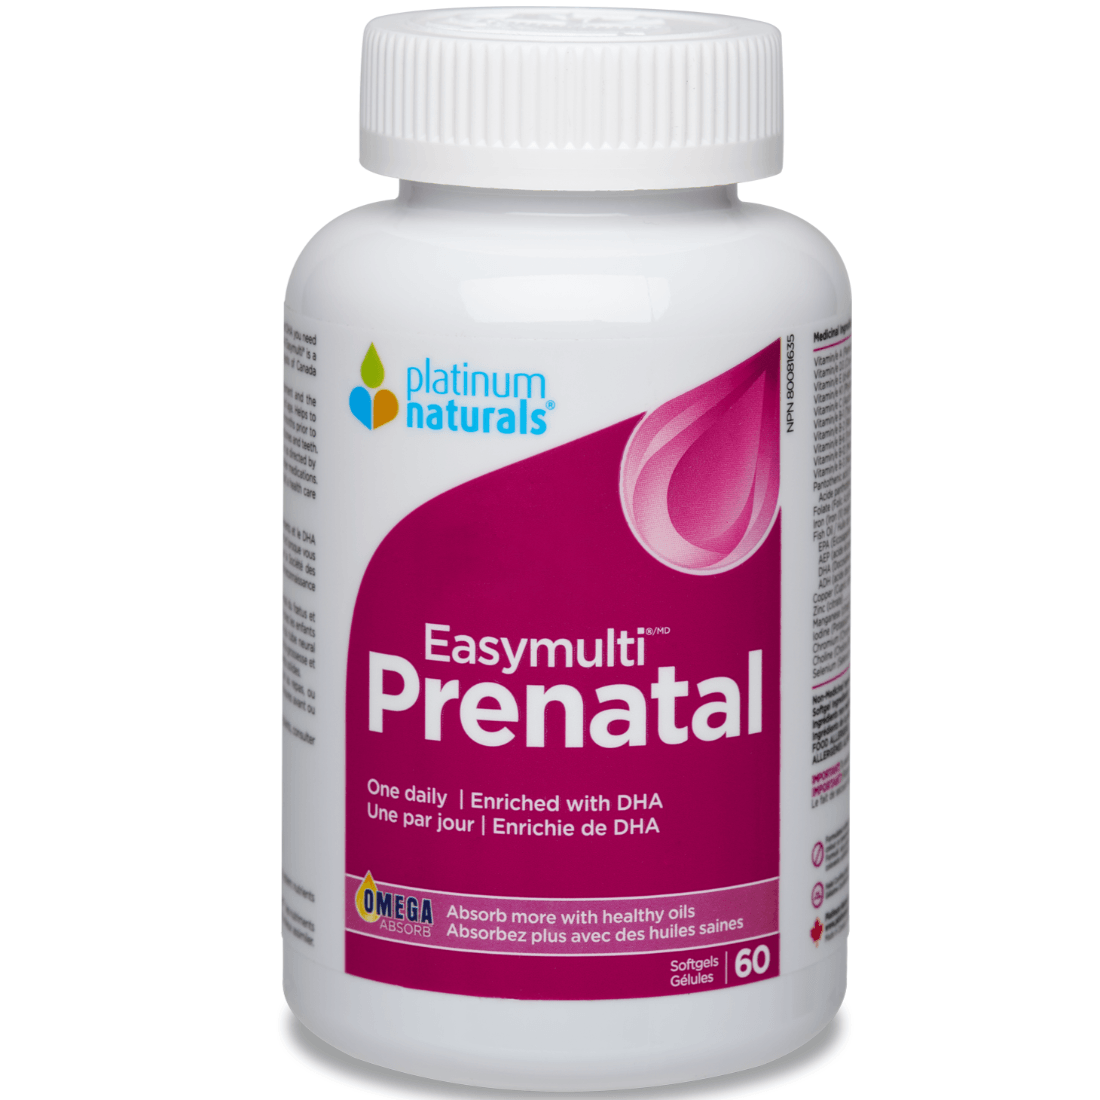 Platinum Naturals Easymulti Prenatal 60 Soft-Gels Supplements - Prenatal at Village Vitamin Store